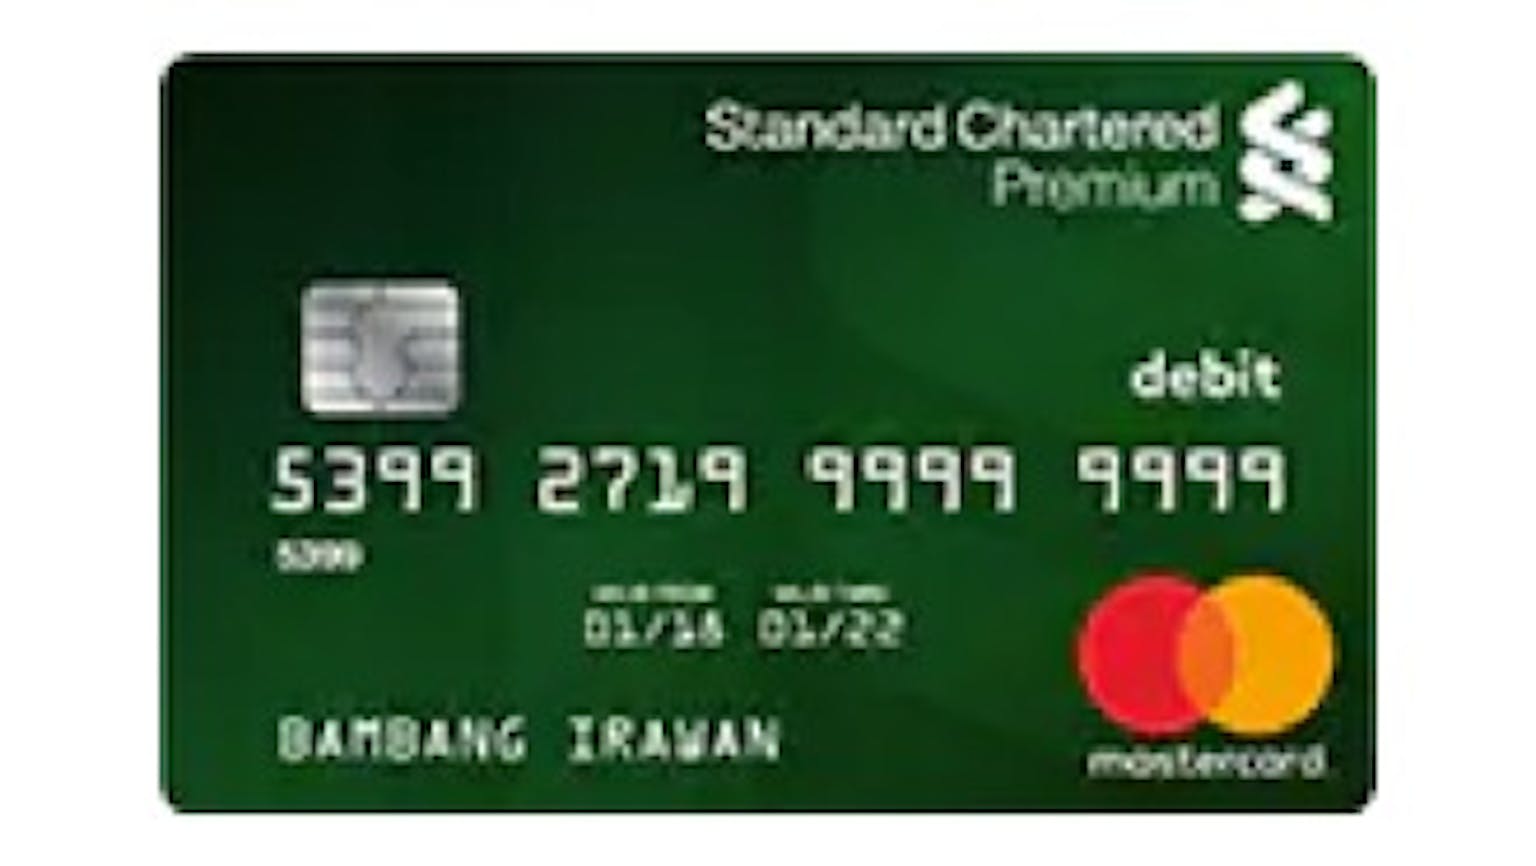 Kartu Debit Premium Standard Chartered